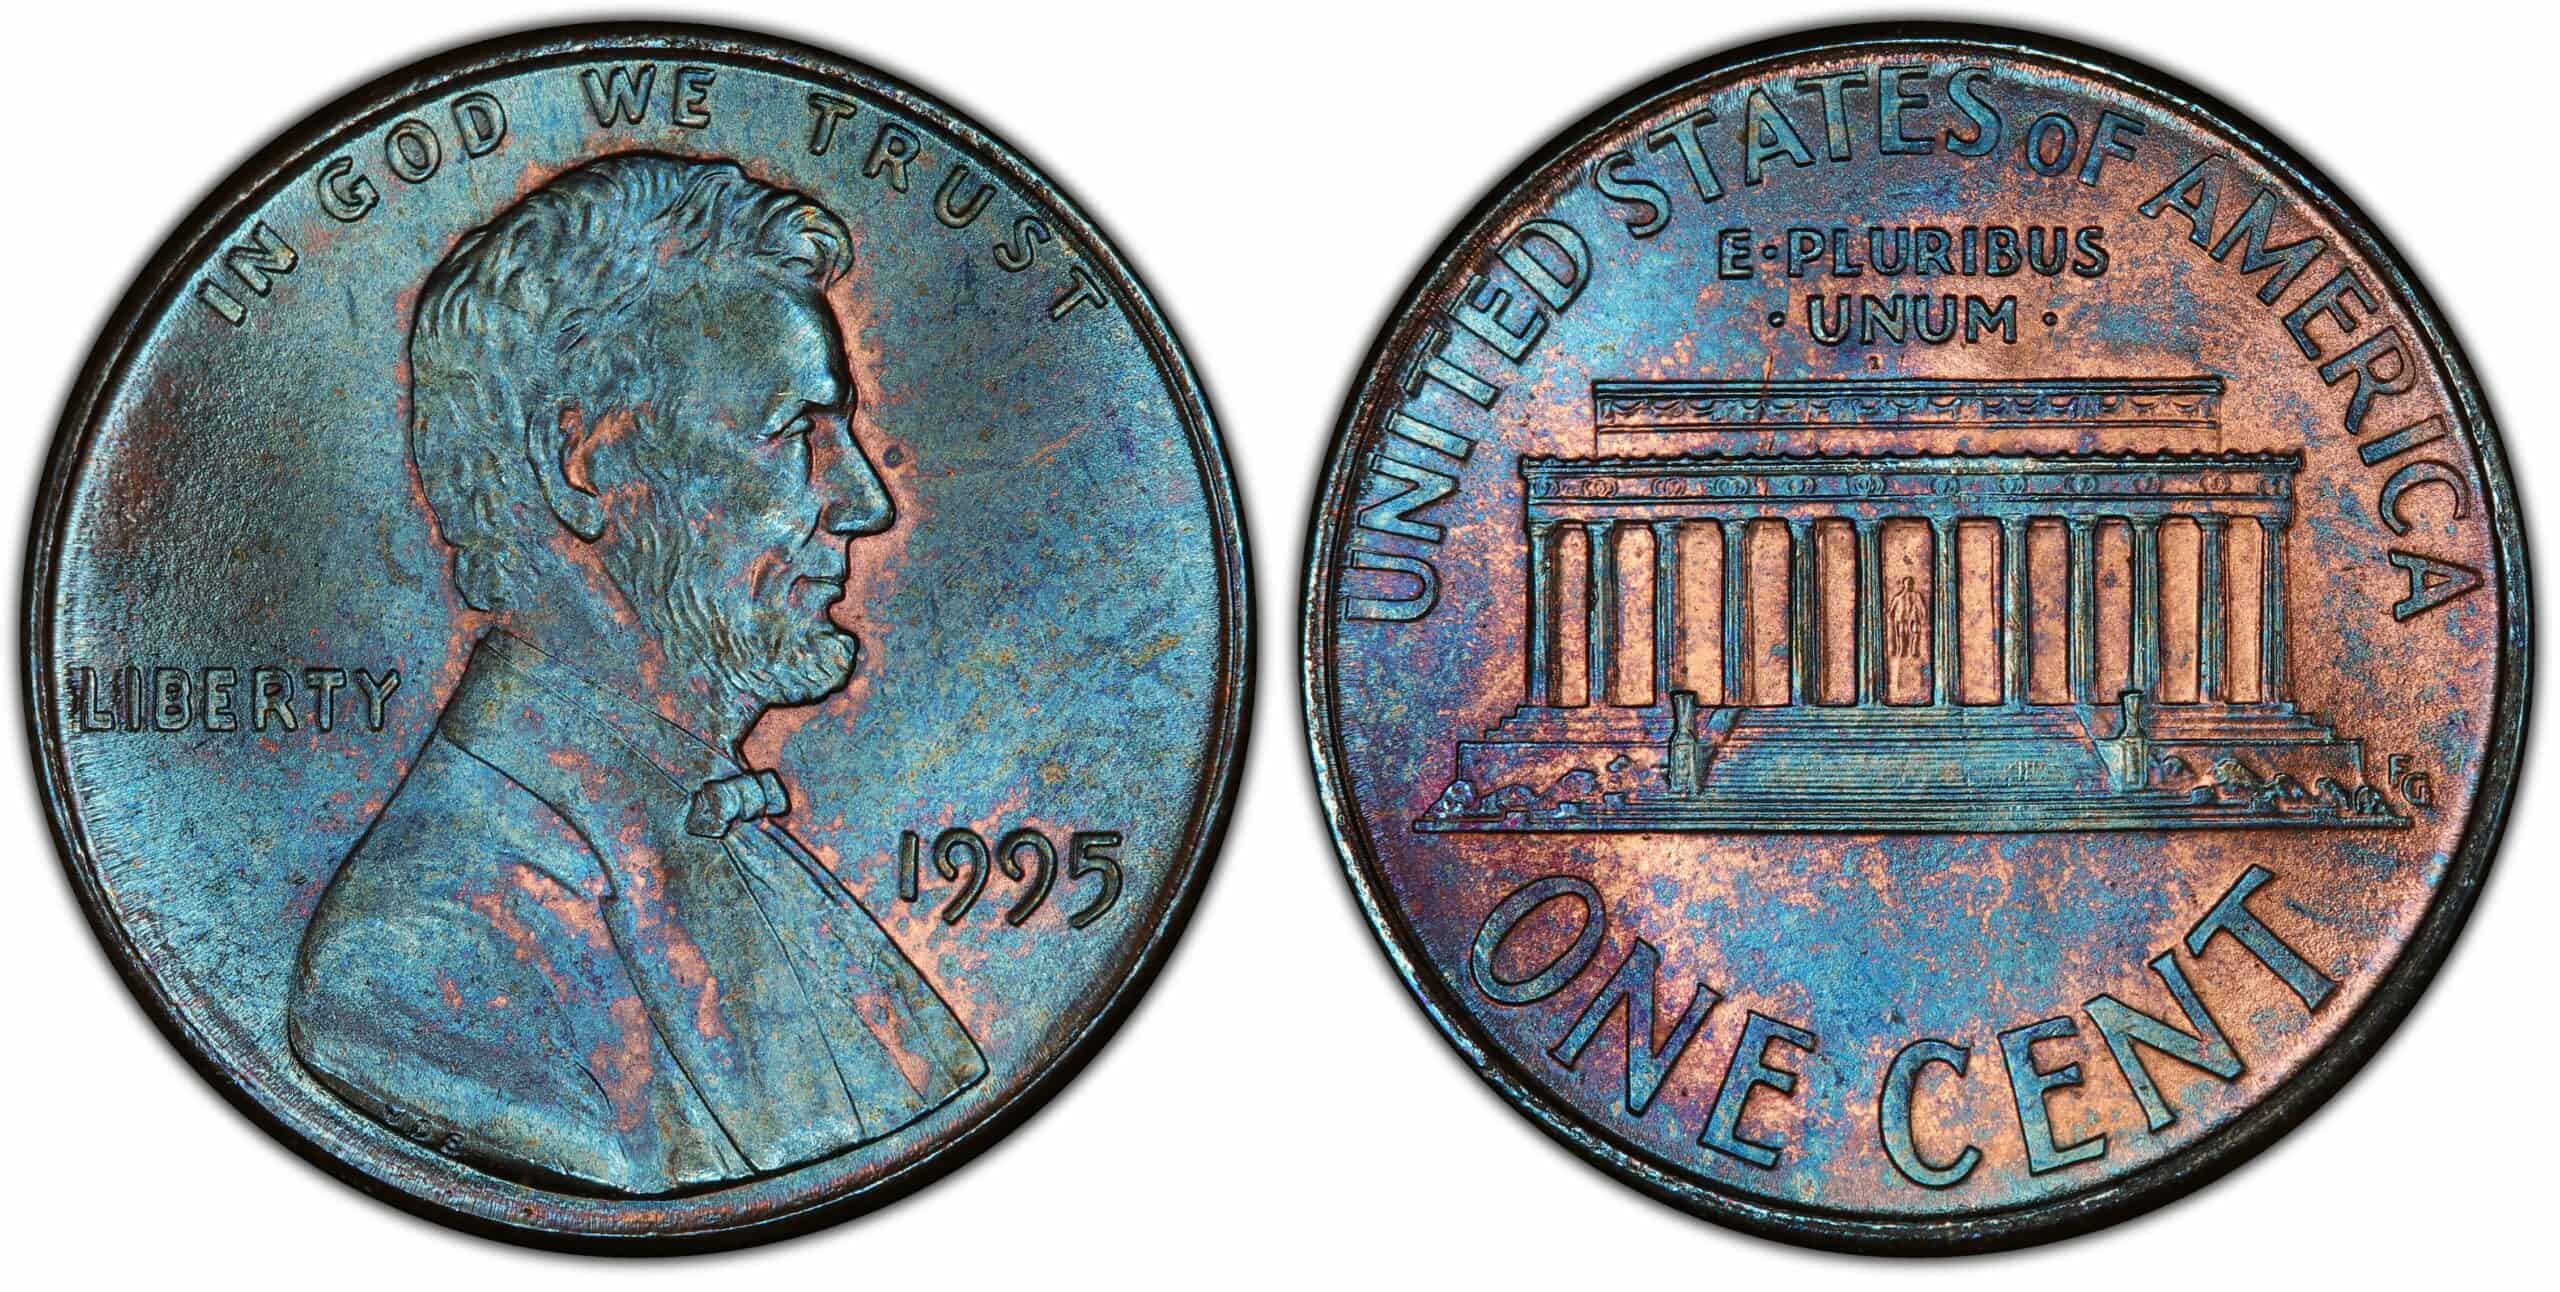 1995 Penny Value Details